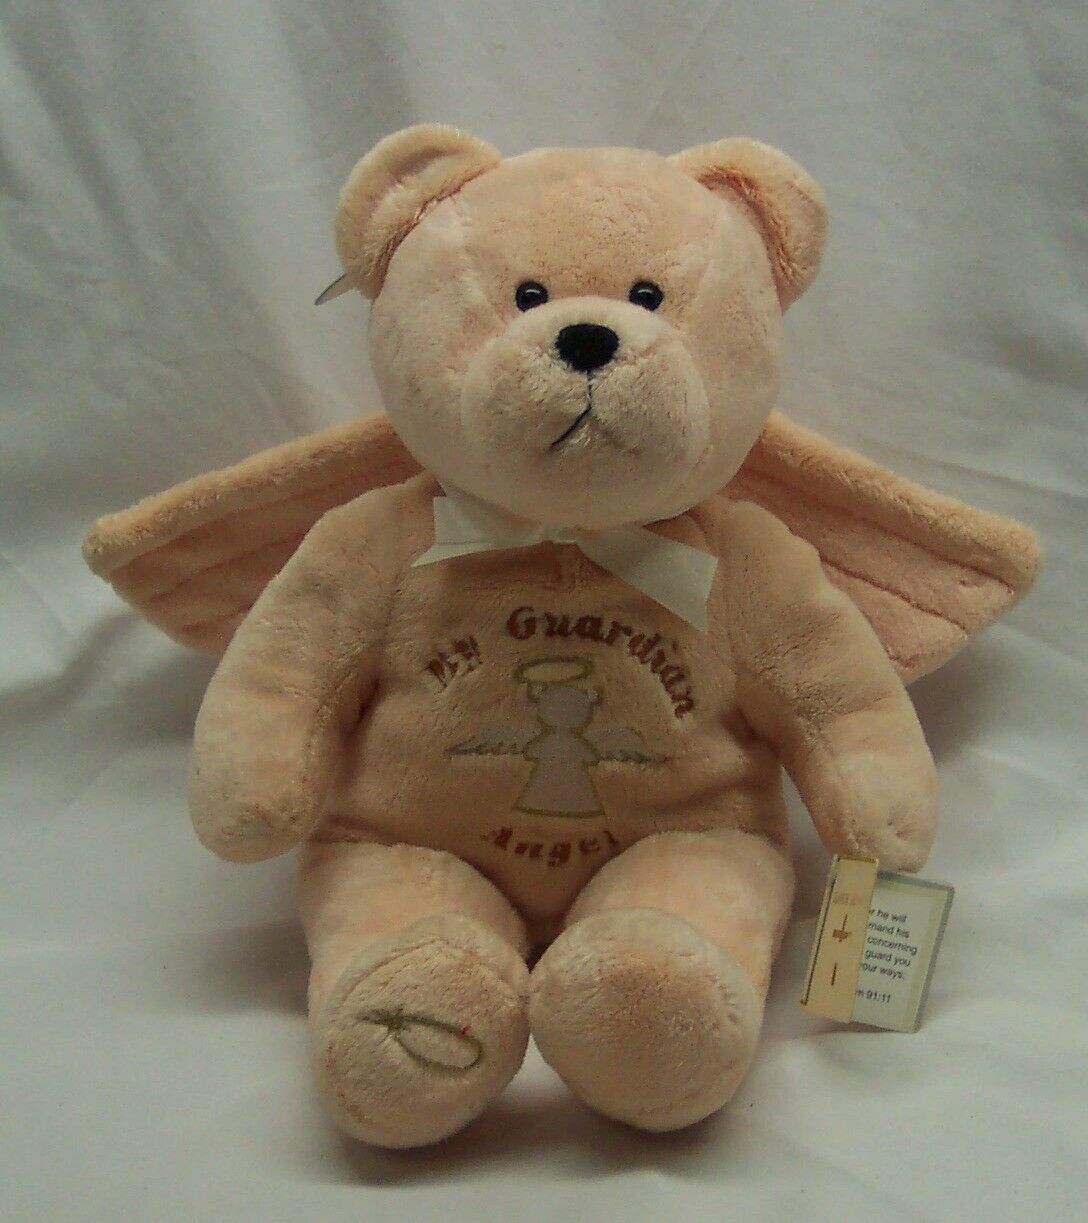 Holy Bears "my Guardian Angel" Teddy Bear 14" Plush Stuffed Animal Toy New